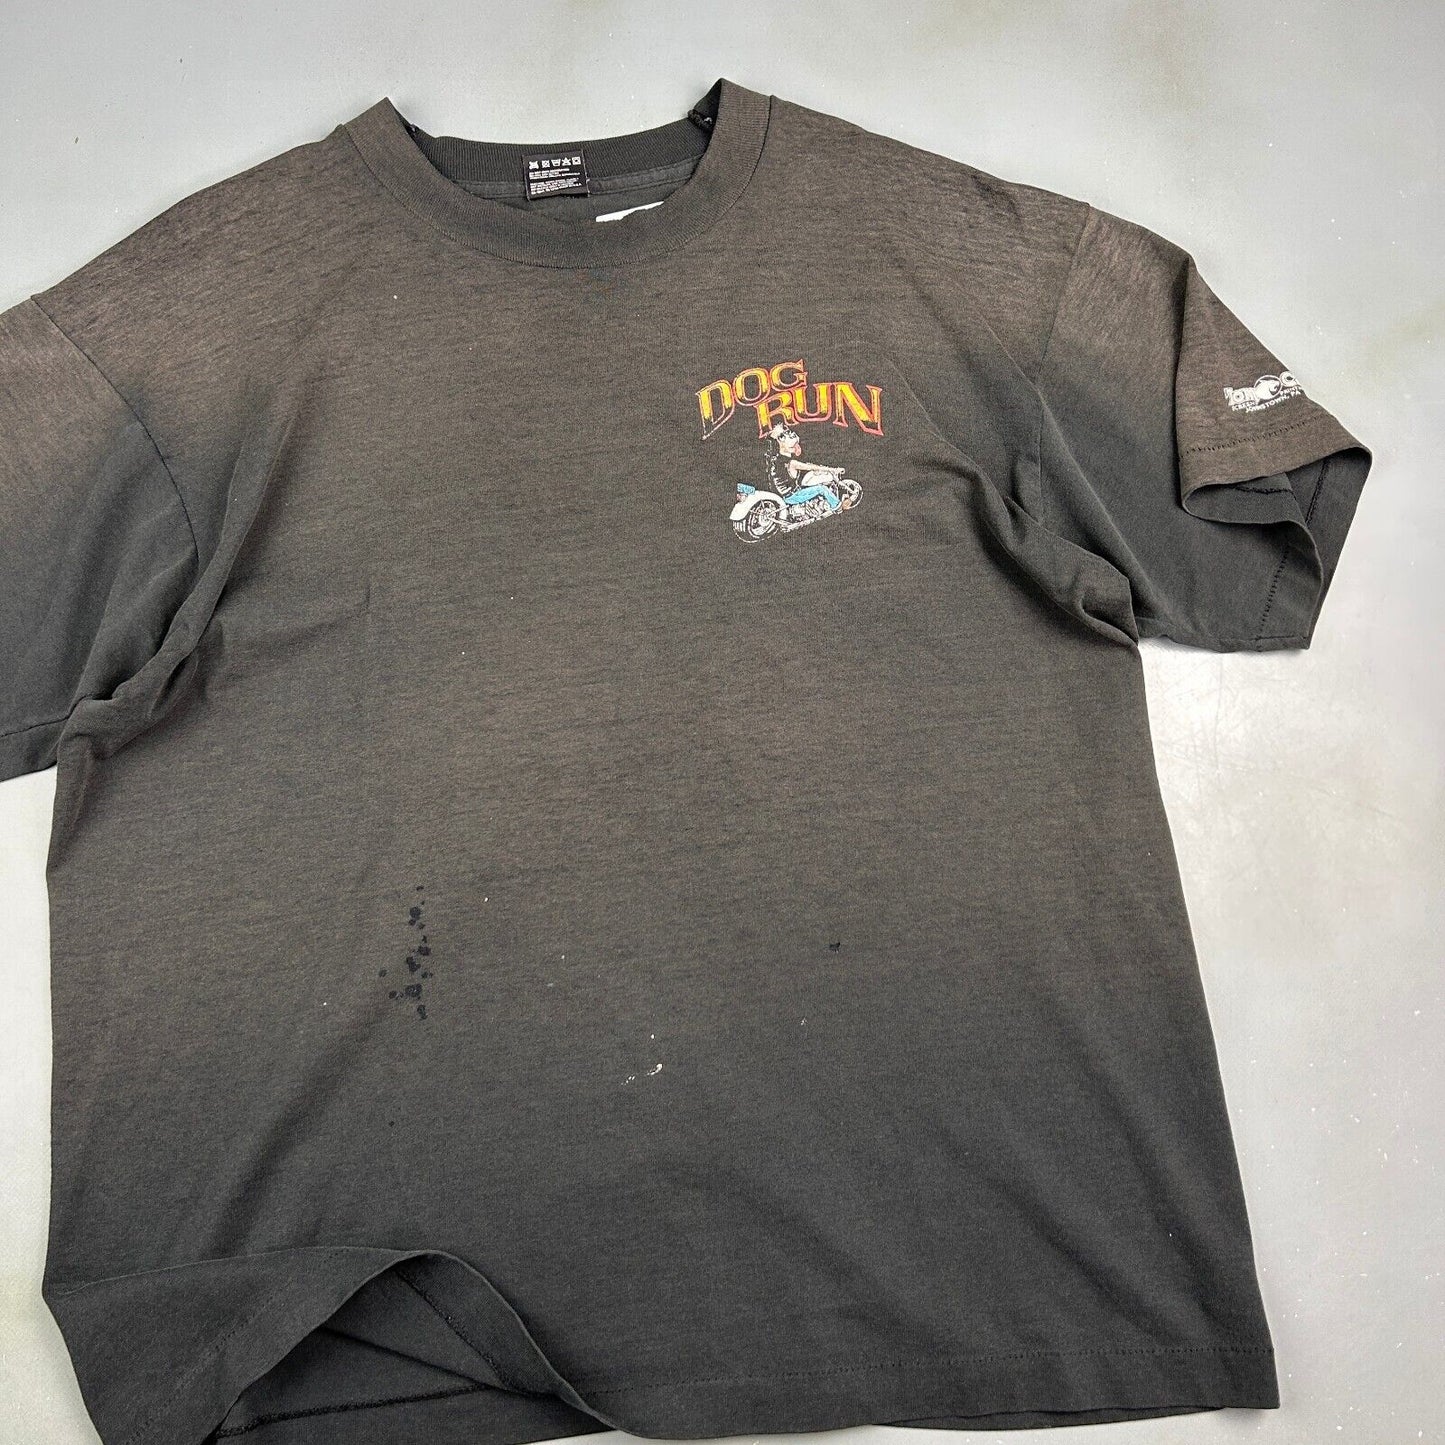 VINTAGE 90s | DOG RUN Motorcycle Biker Sun Faded T-Shirt sz XL Adult